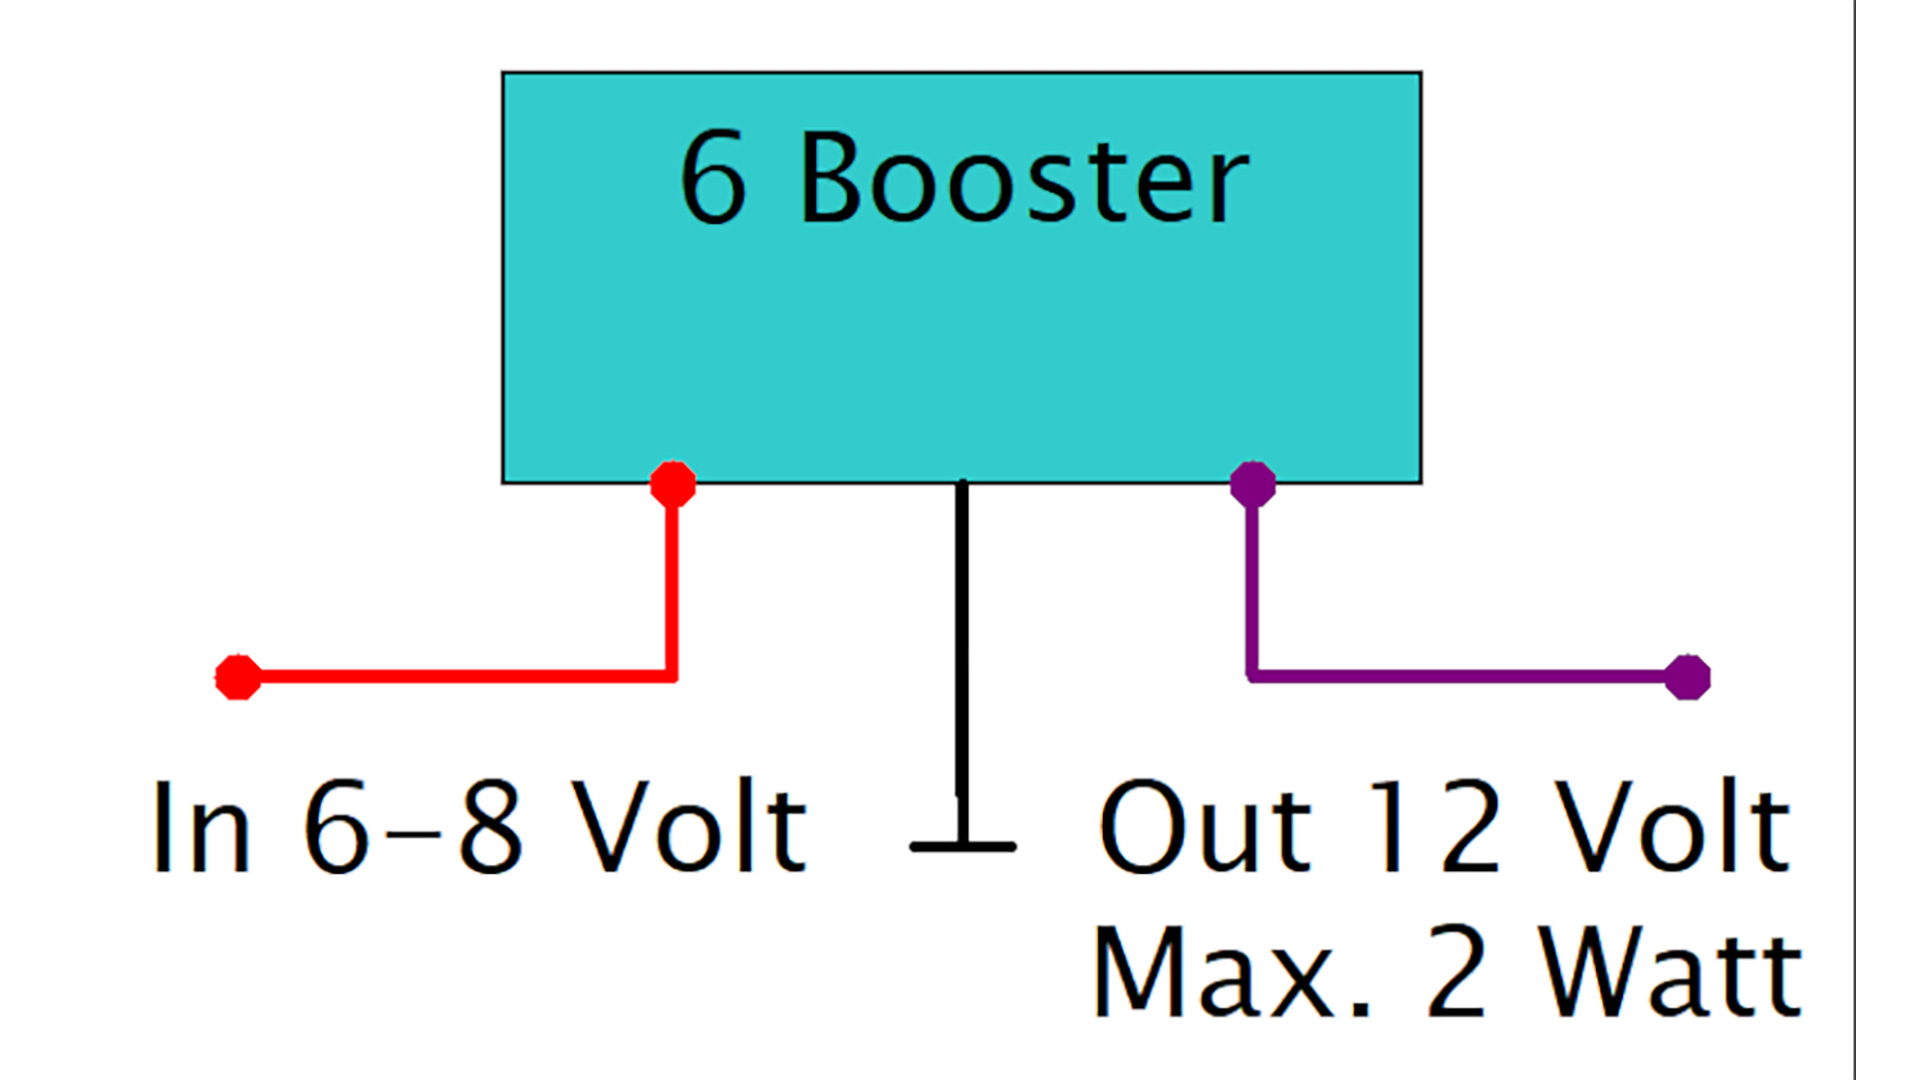 axel_joost 6 booster, 6 volt to 12 volt voltage converter